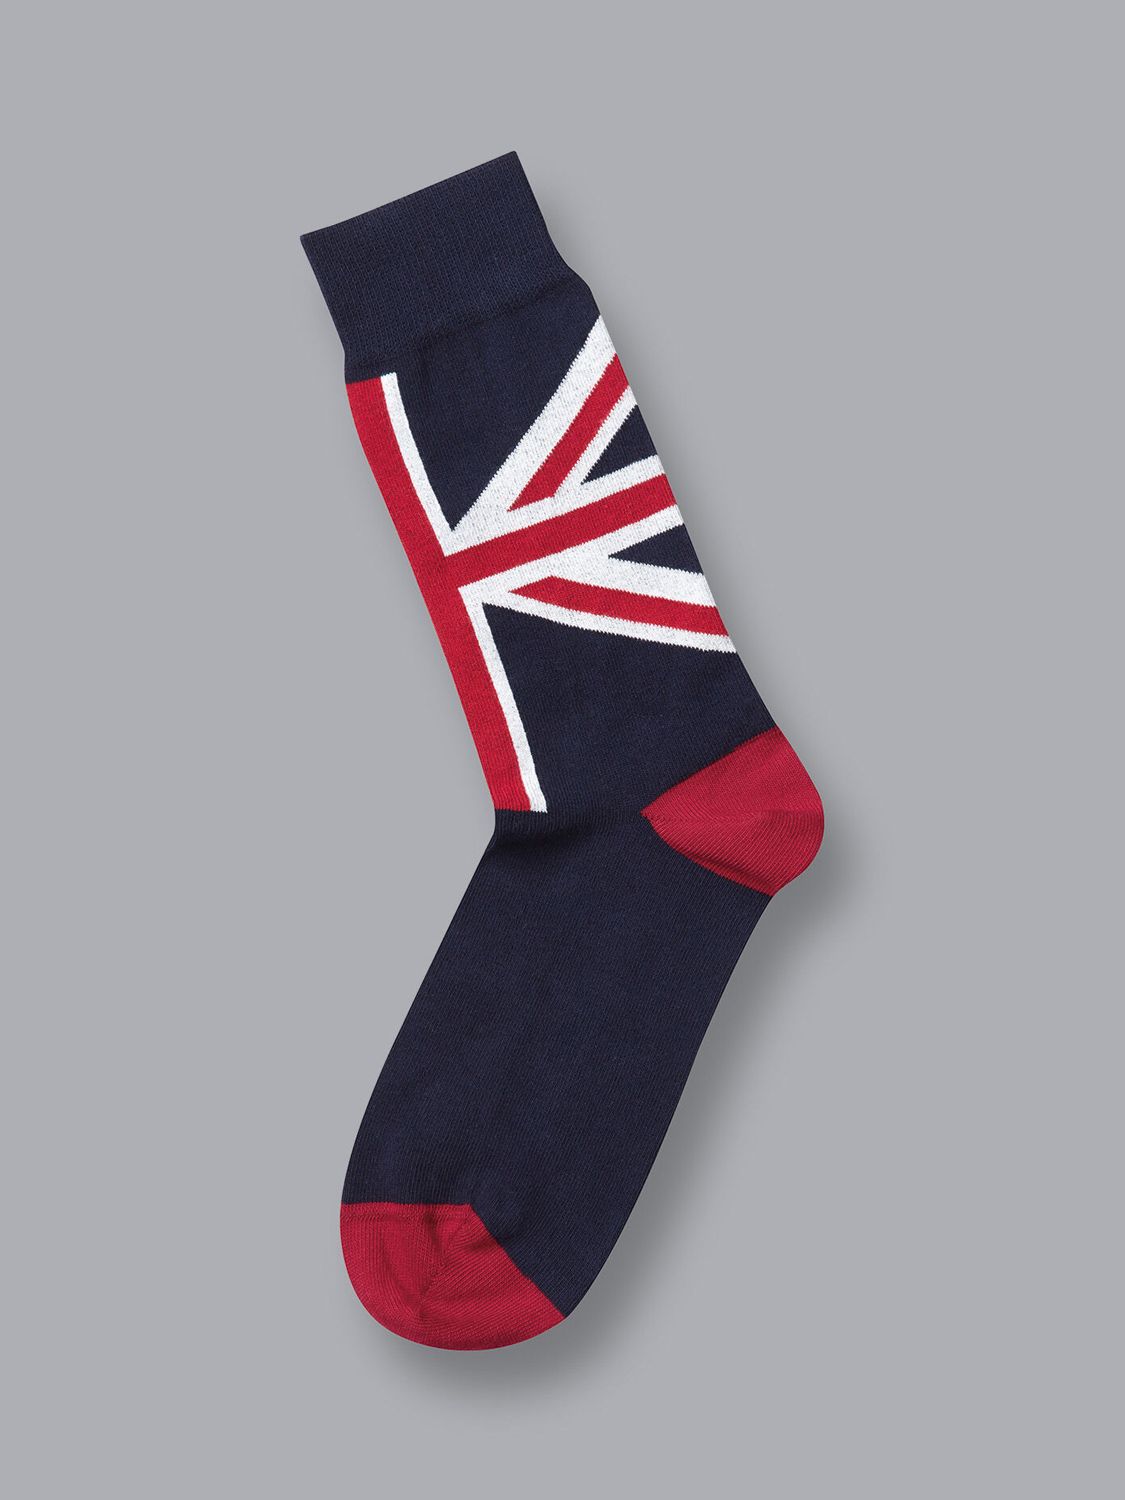 Charles Tyrwhitt Union Jack Socks, Navy, L